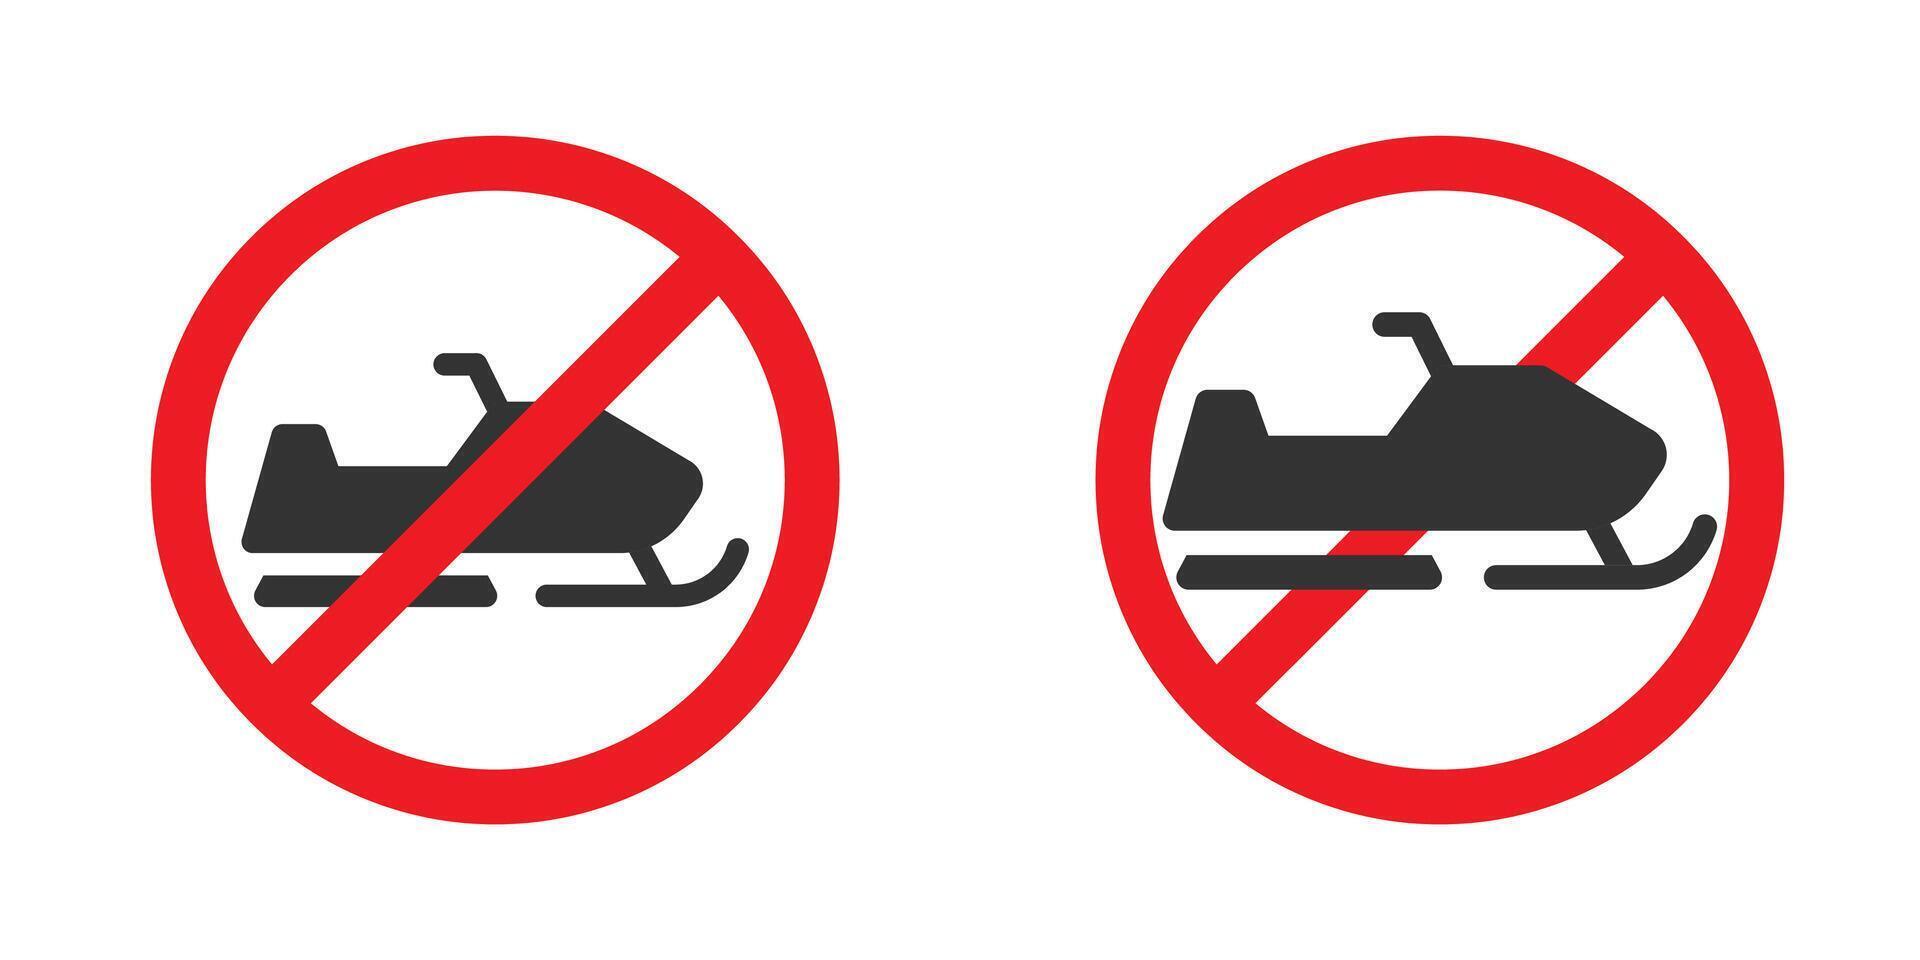 prohibido motos de nieve signo. vector ilustración.